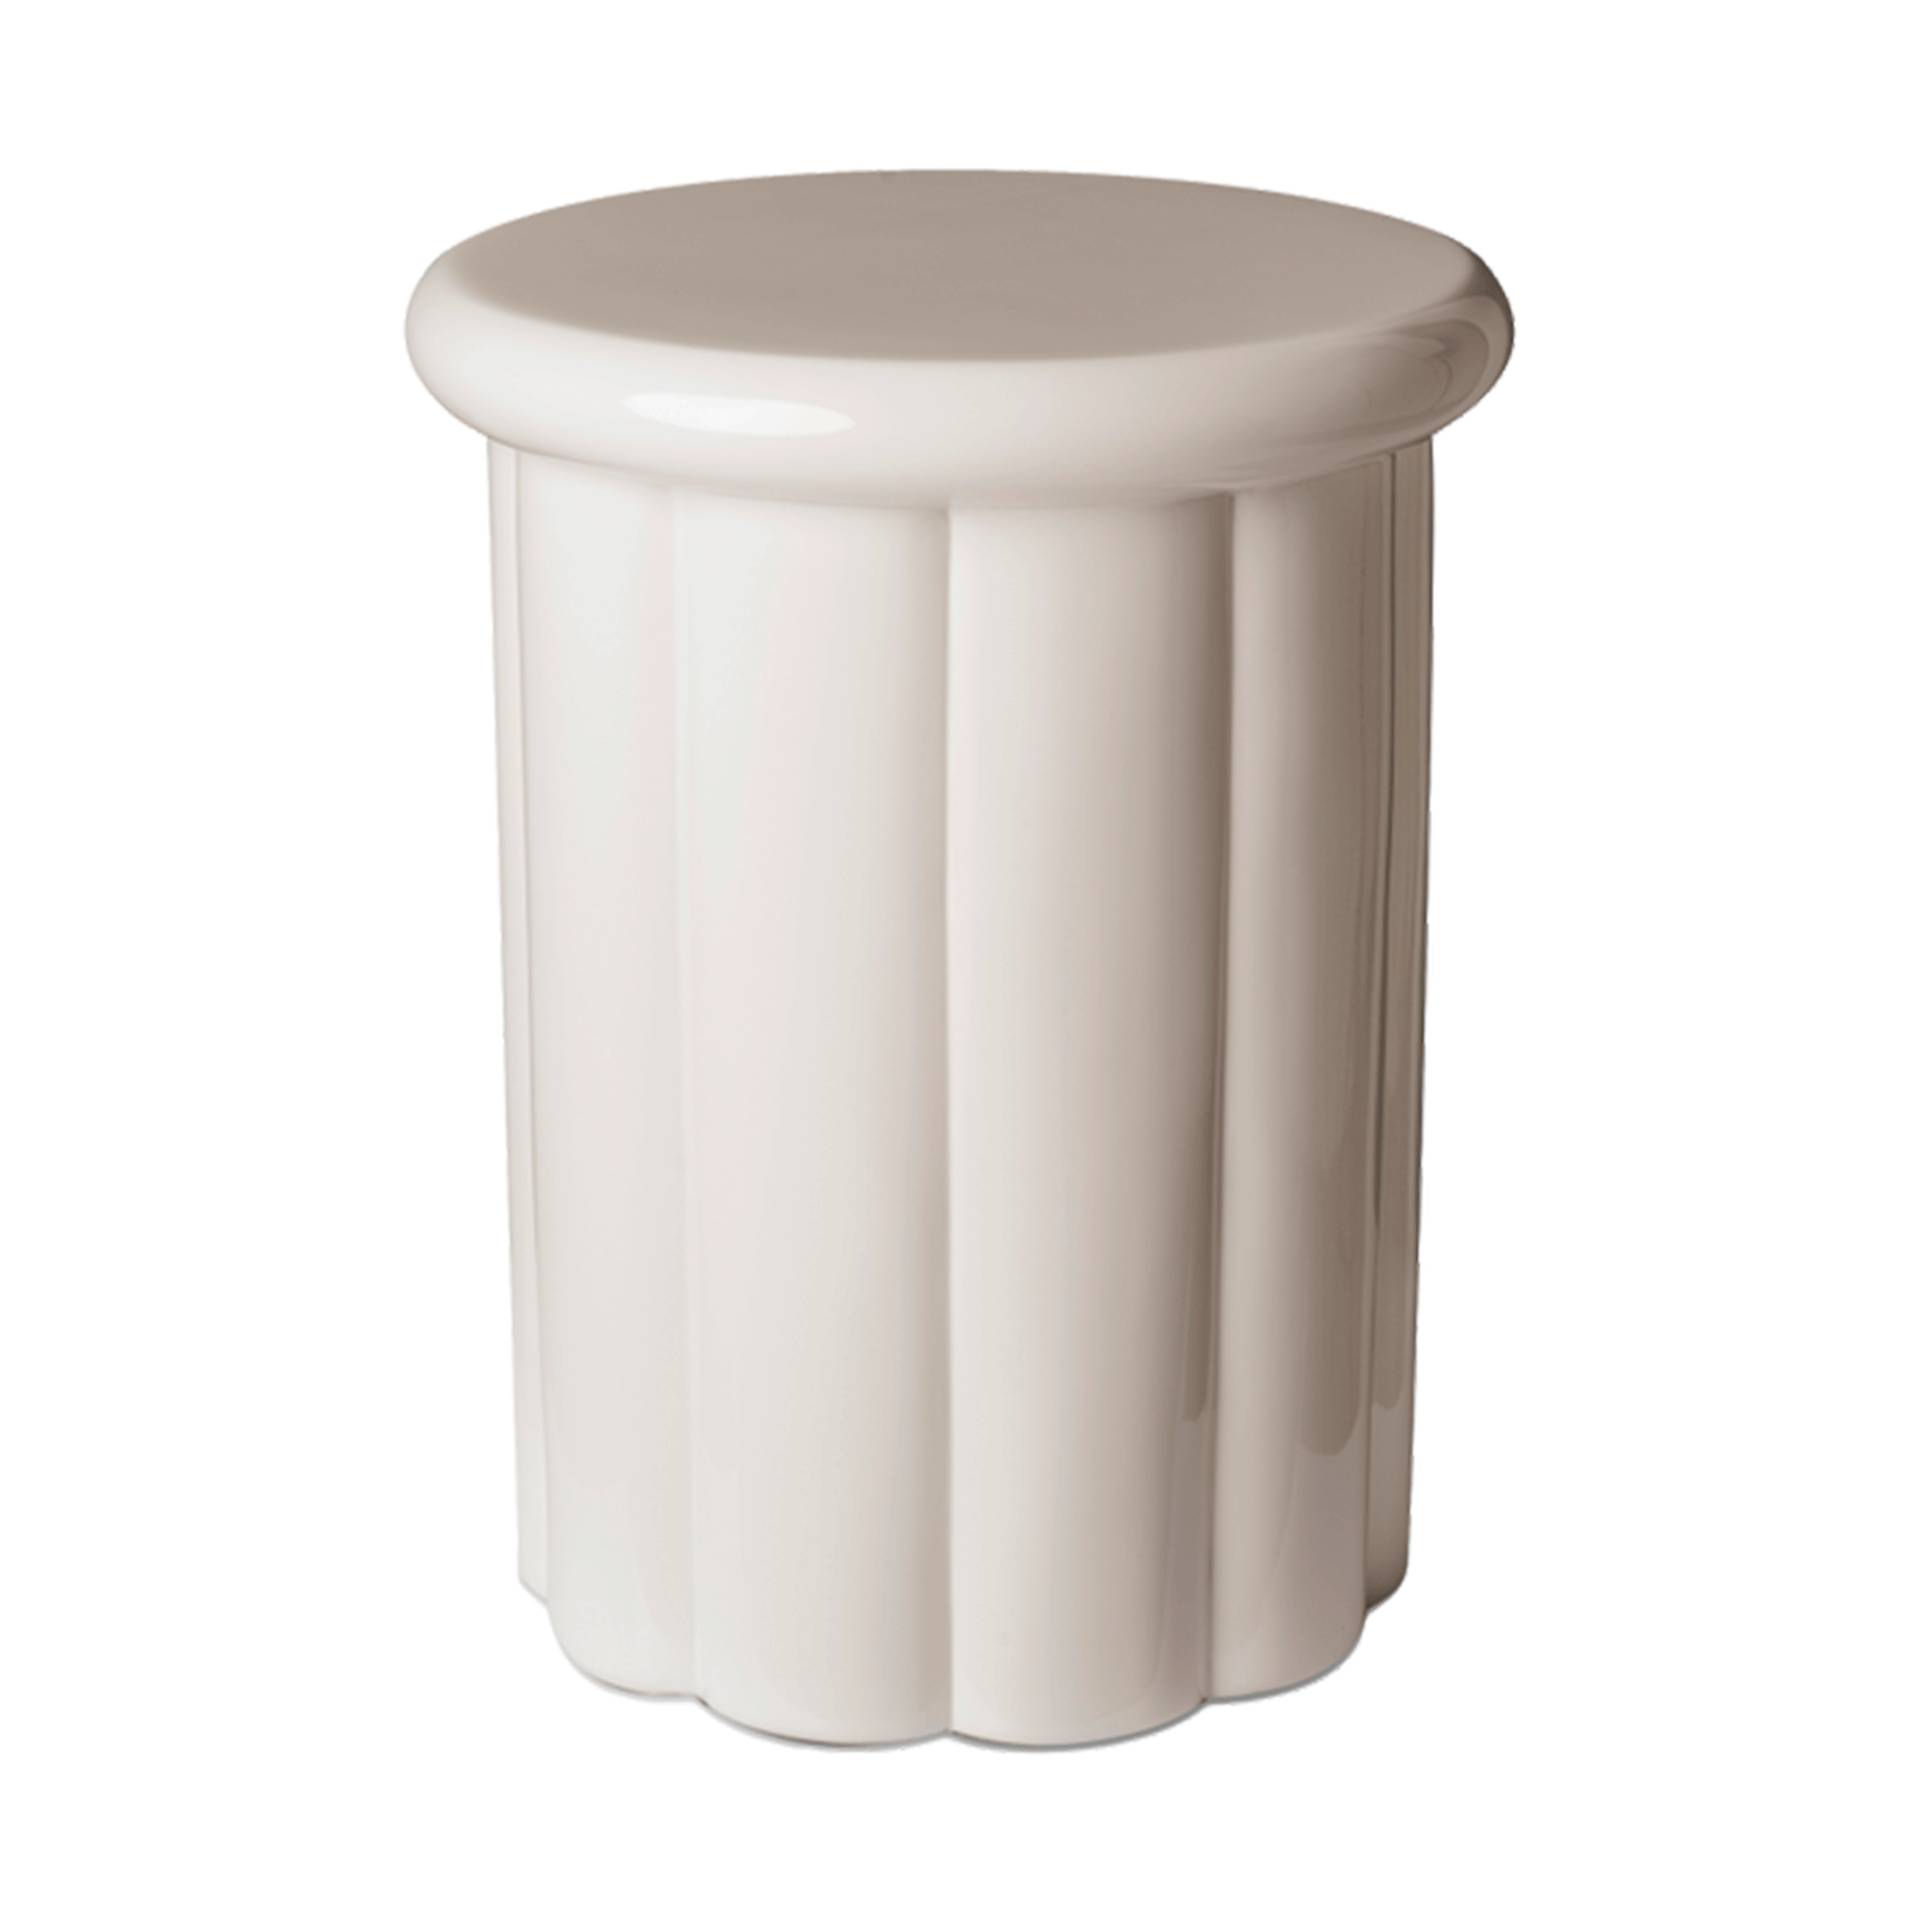 pols potten - Roman Hocker - beige/lackiert/H x Ø 46,5x35,5xm von pols potten